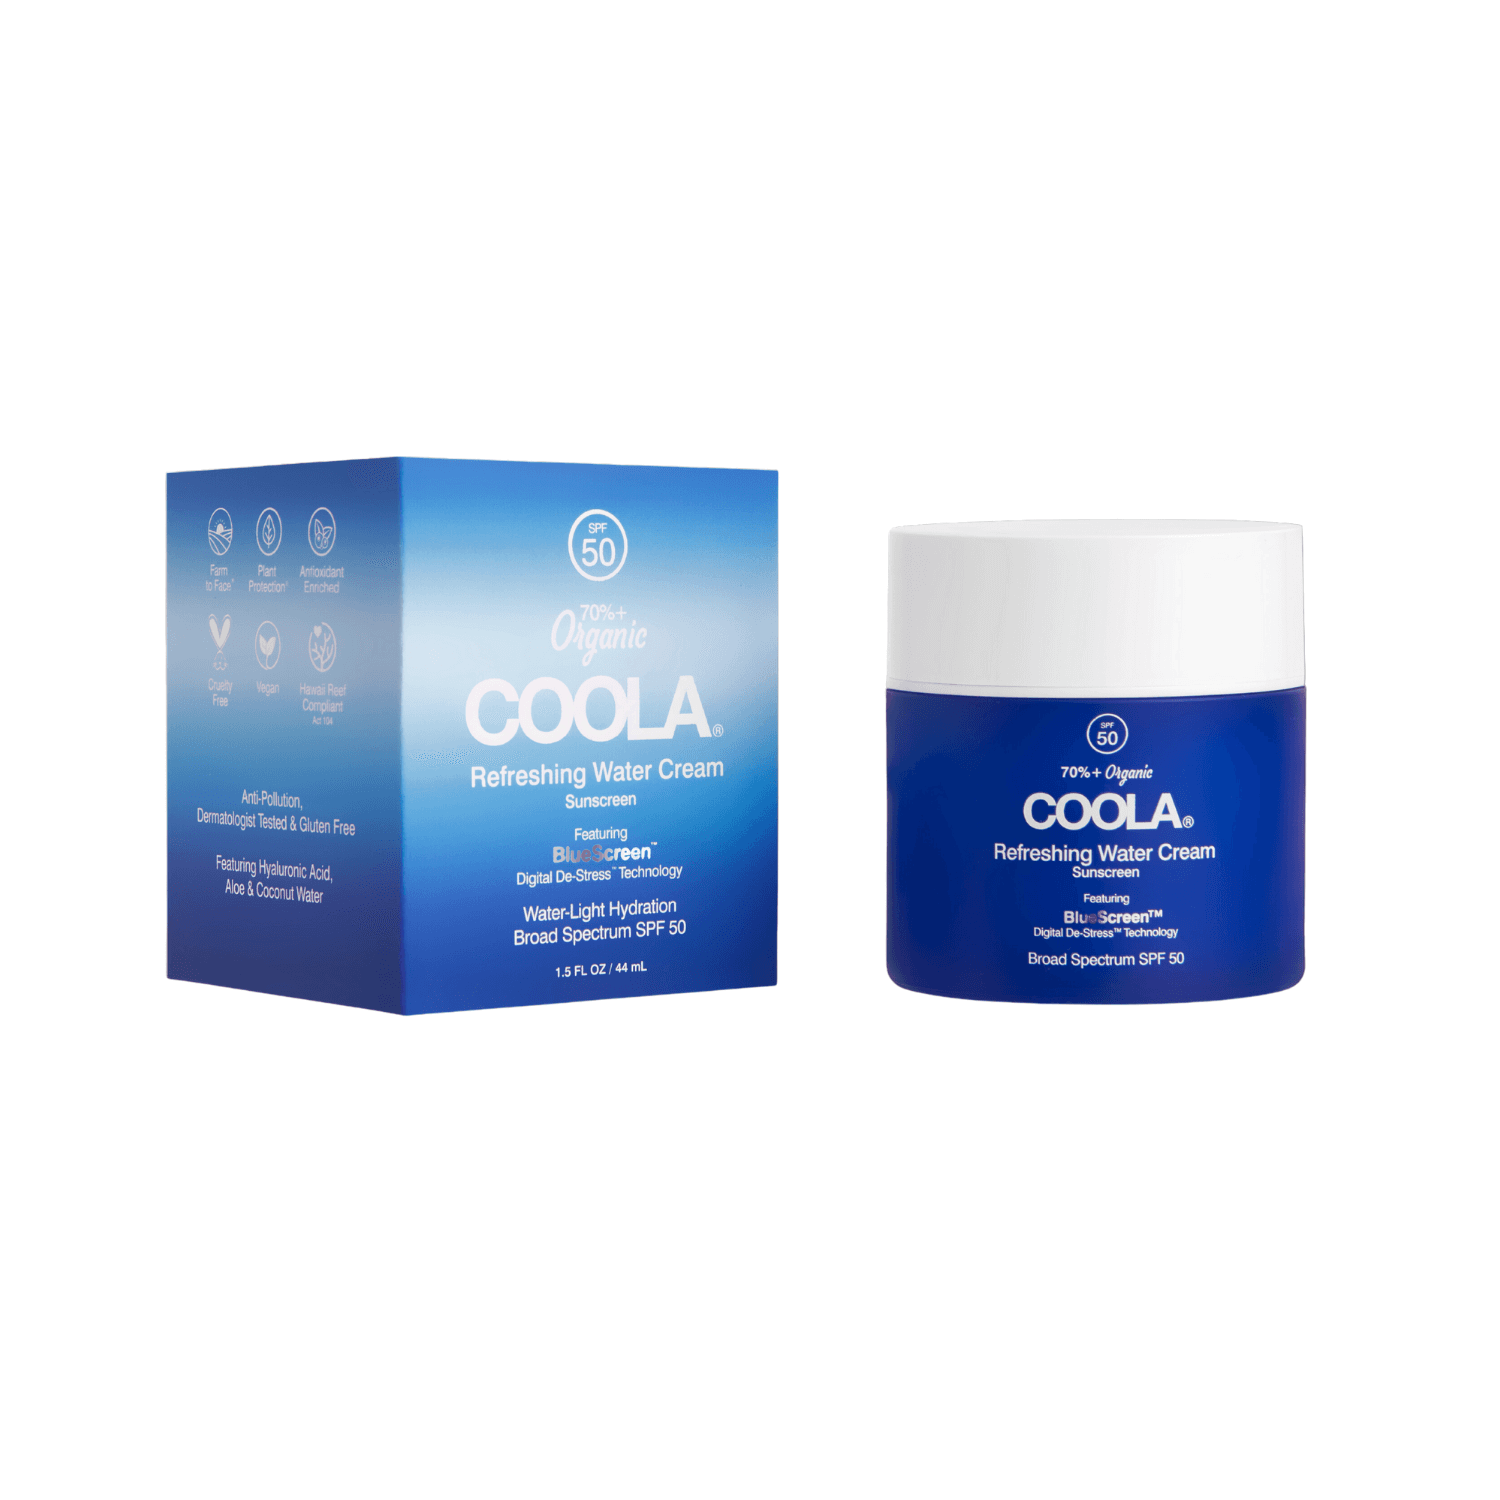 COOLA - Refreshing Water Cream Organic Face Sunscreen SPF 50